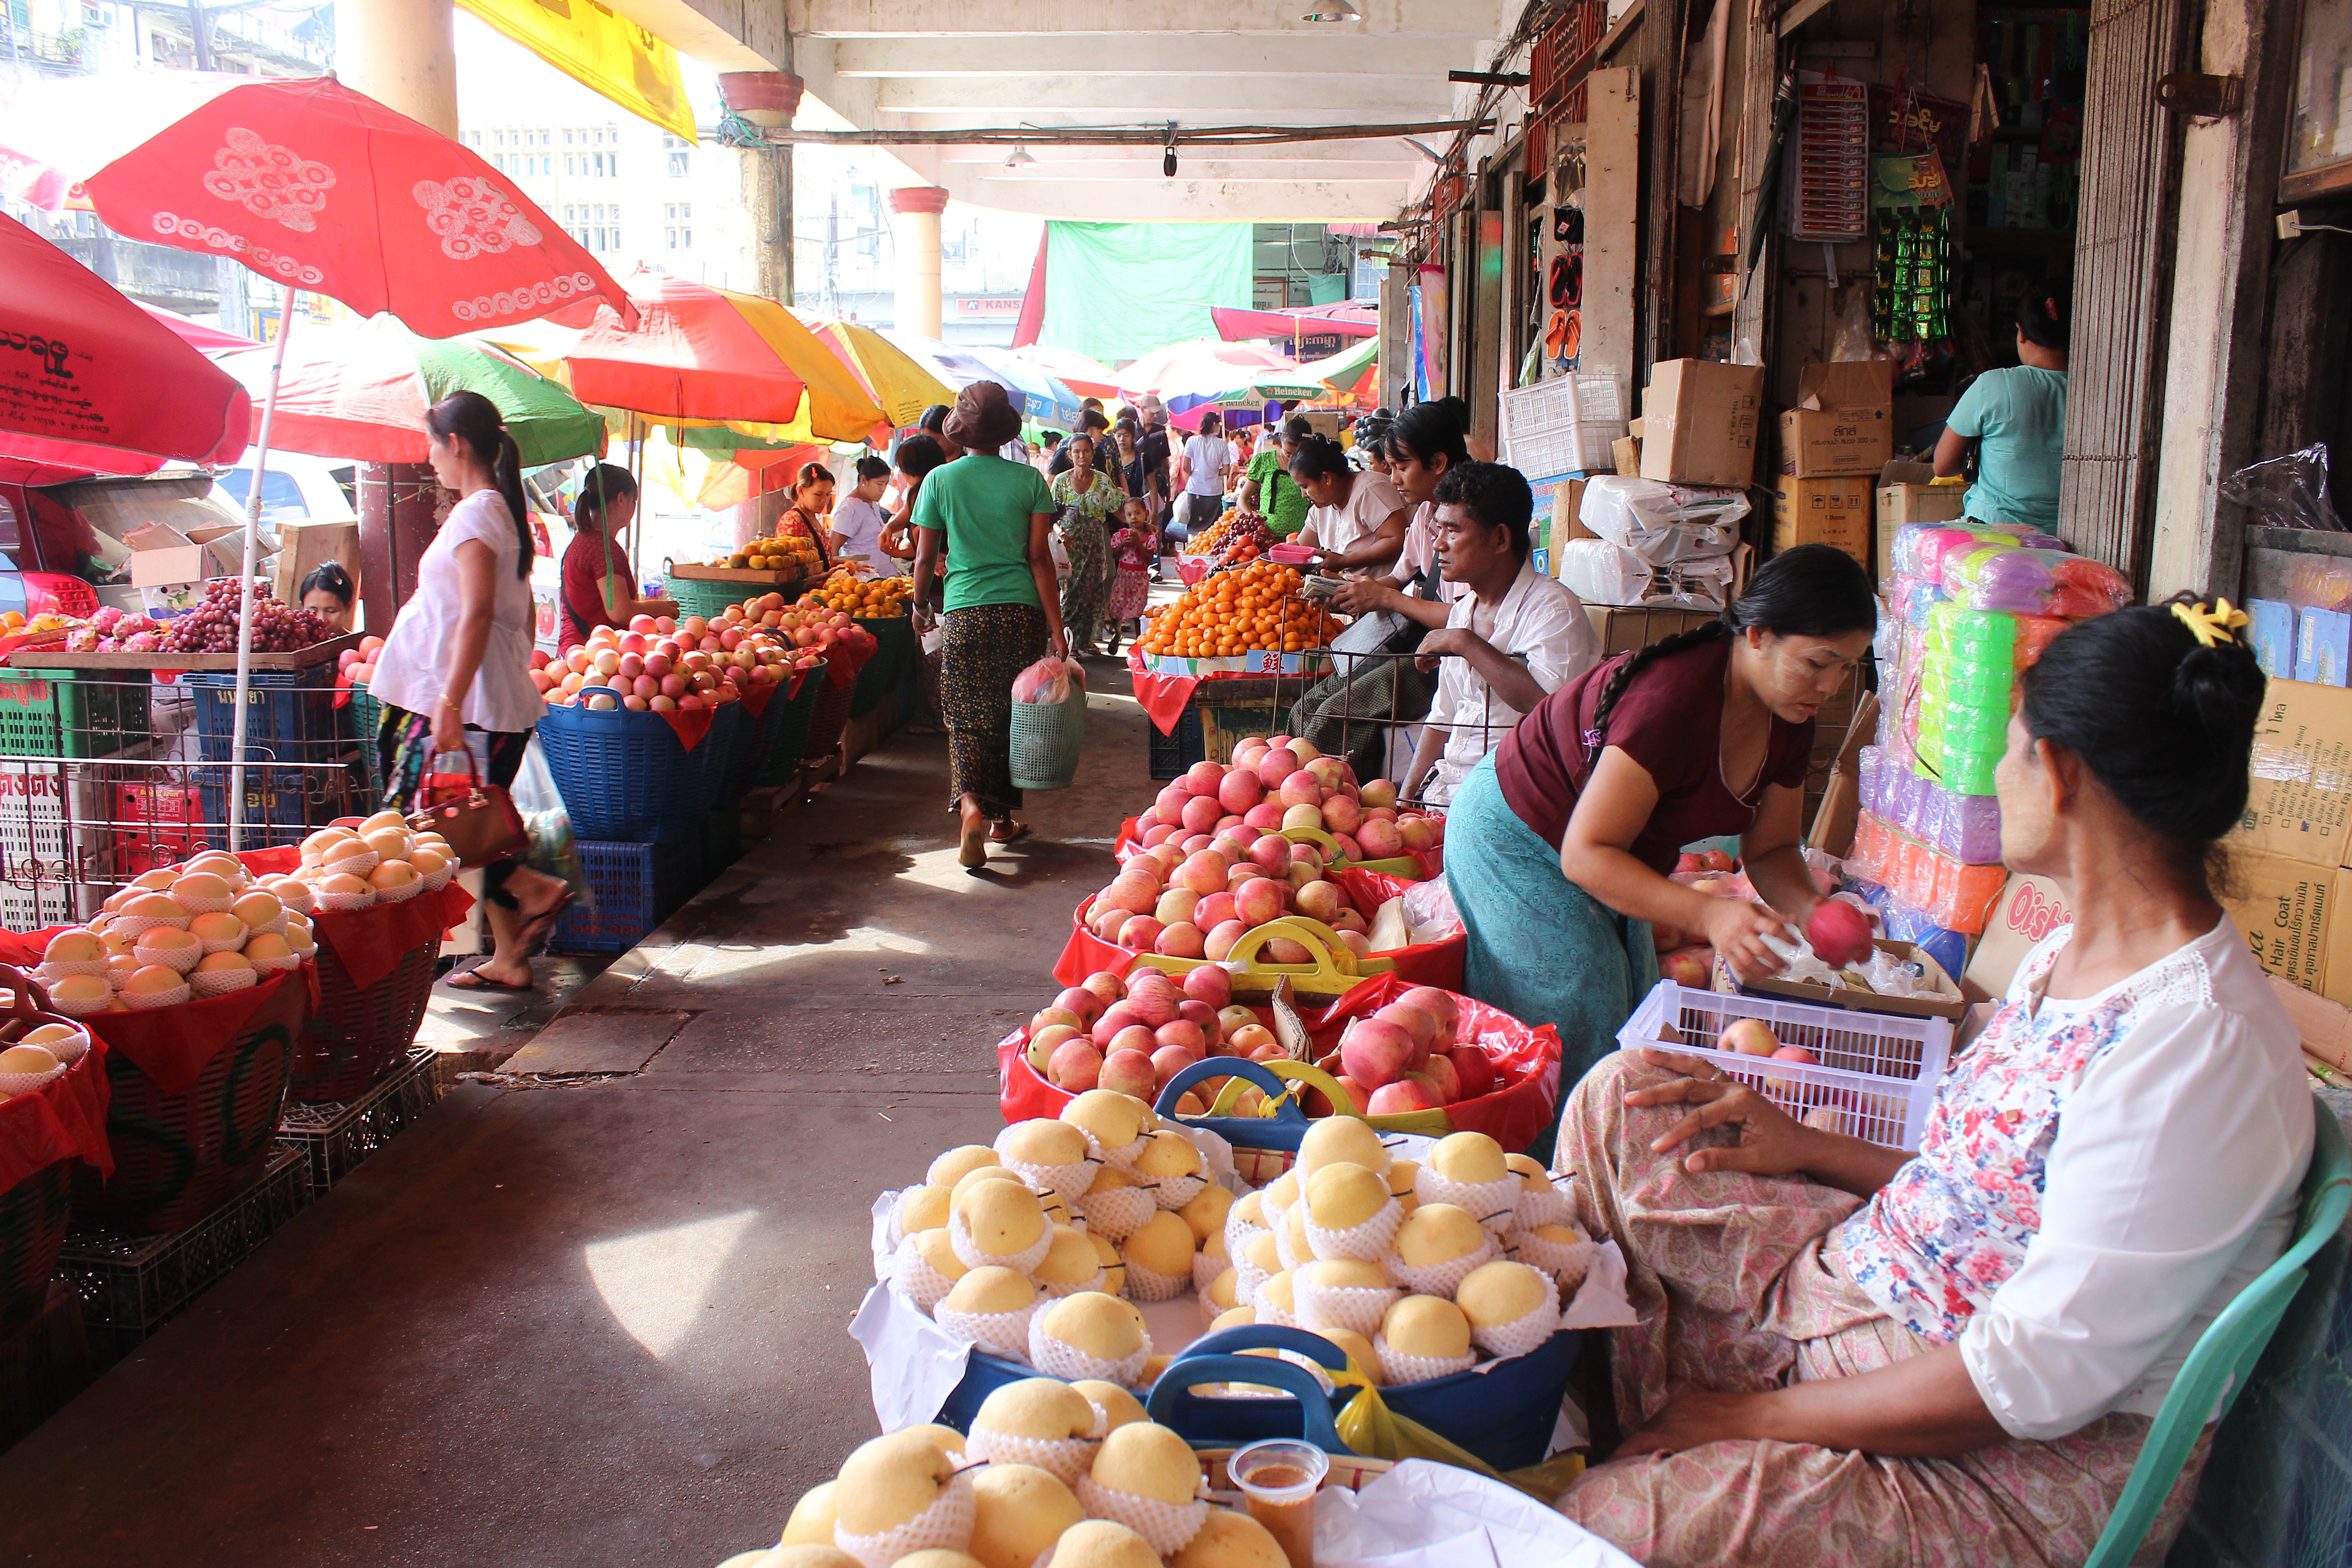 Fruit market beneath arcade structure